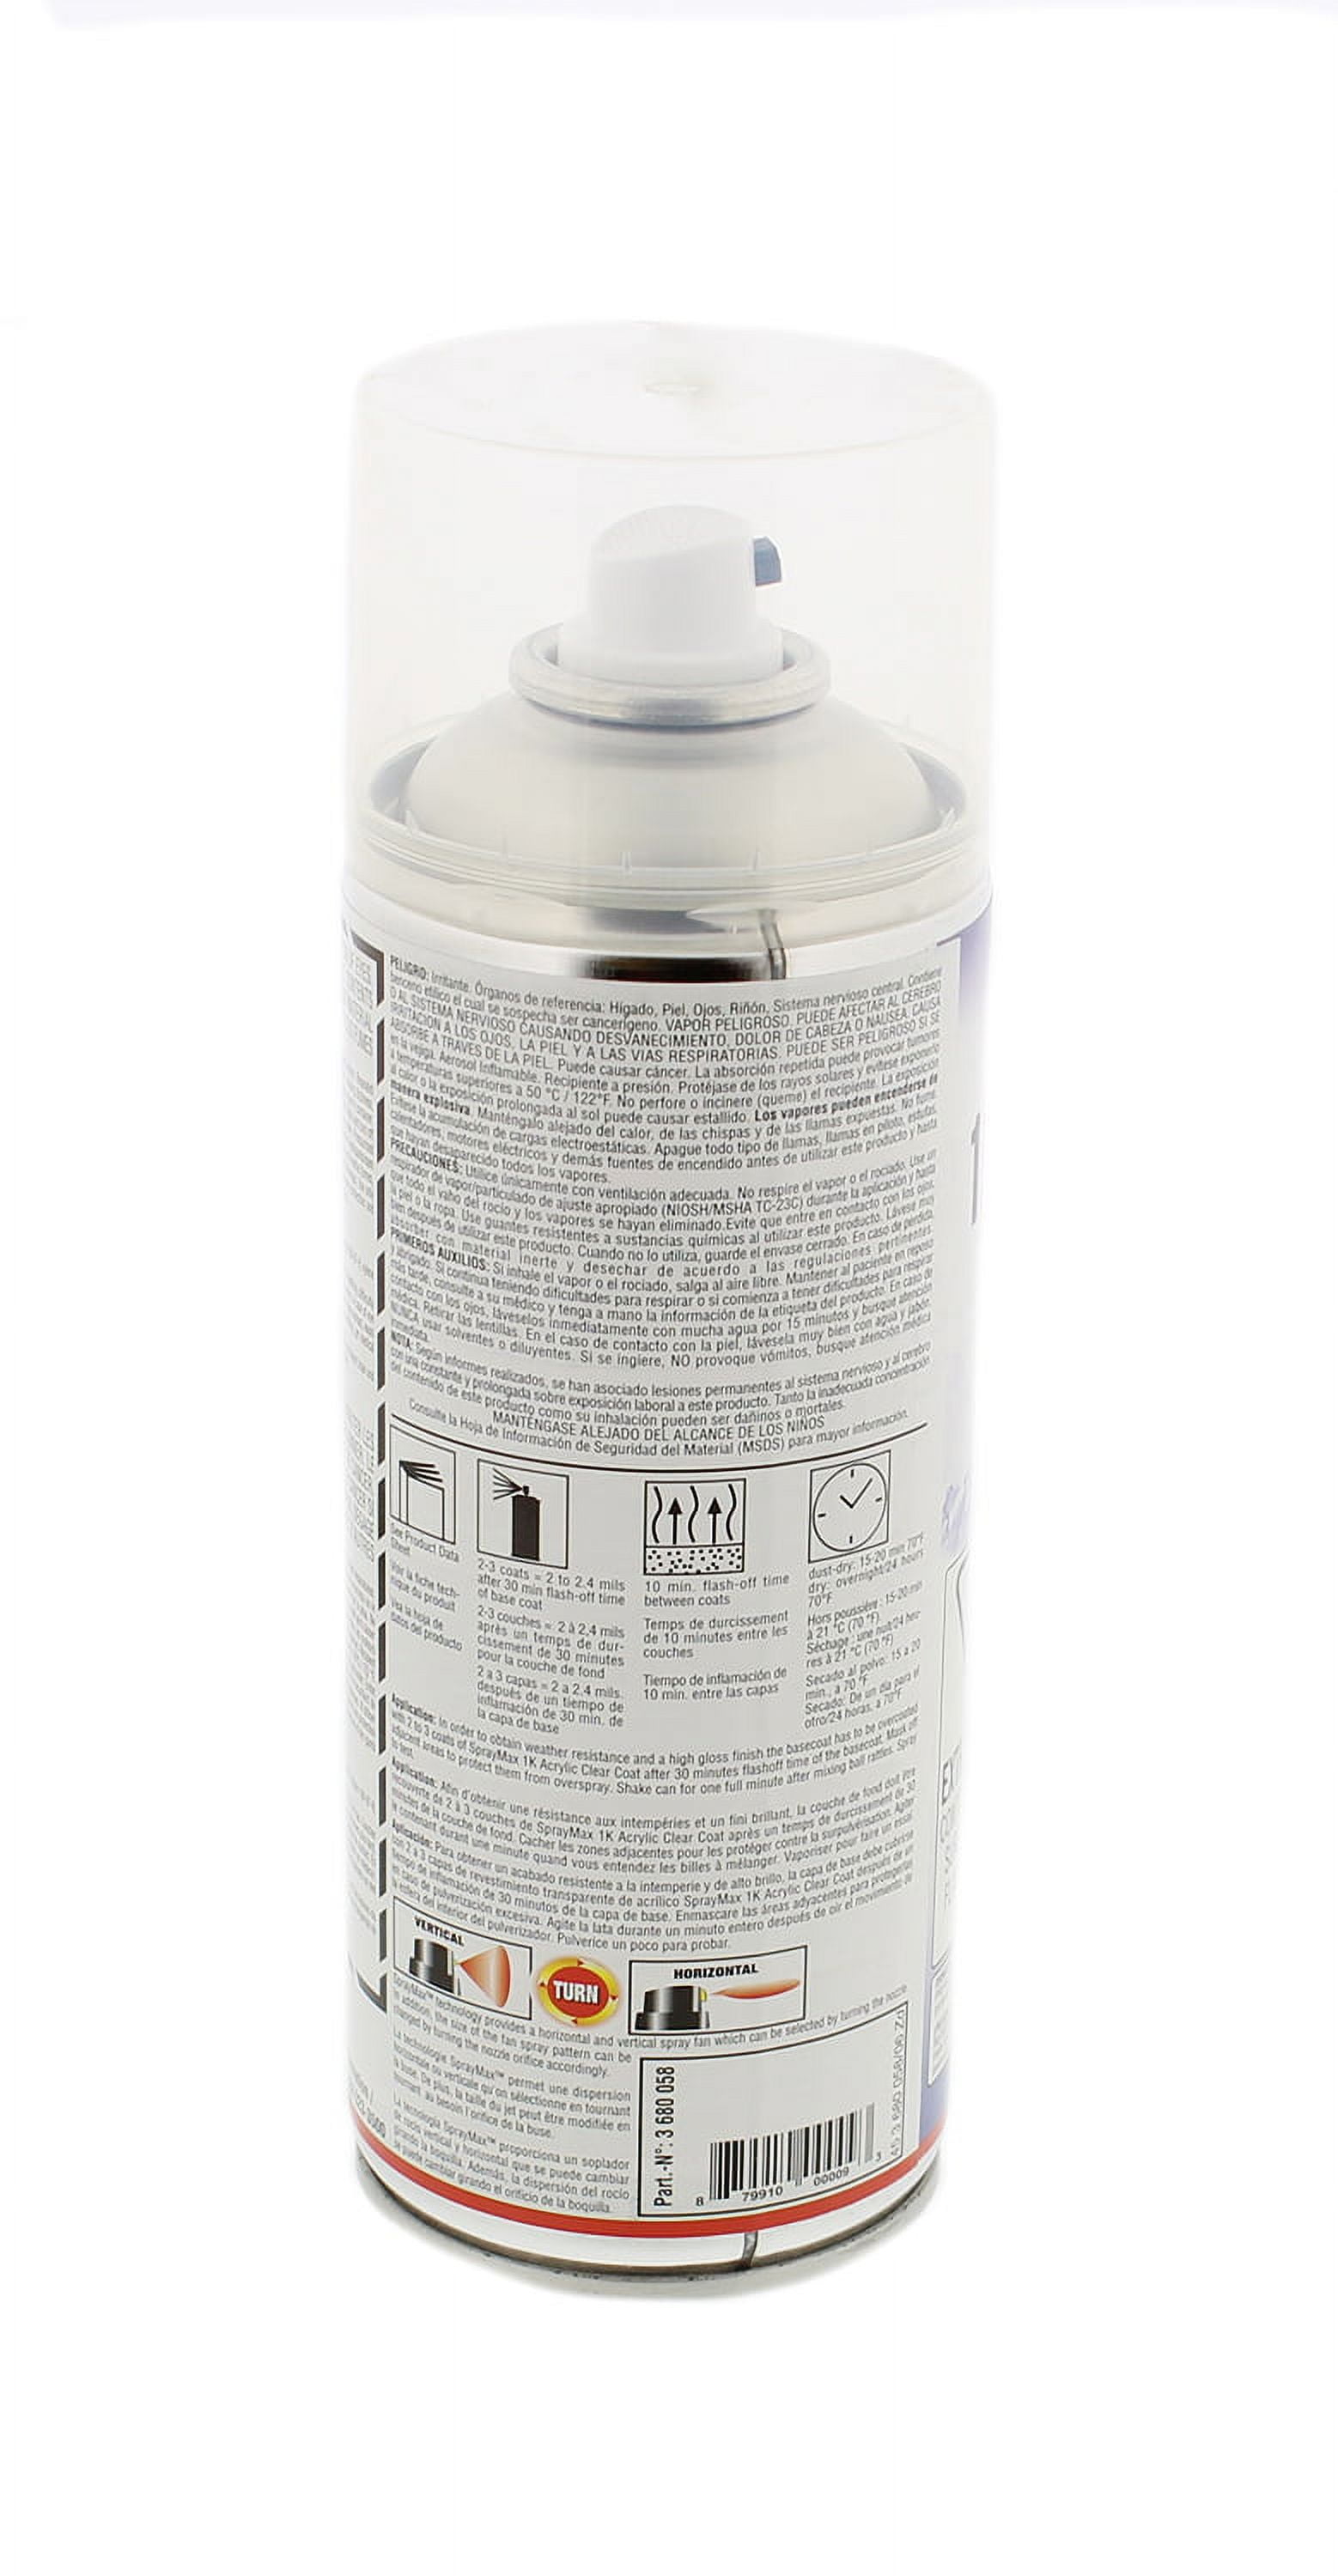 SprayMax 2K Matte Clear Coat, Aerosol 3680065